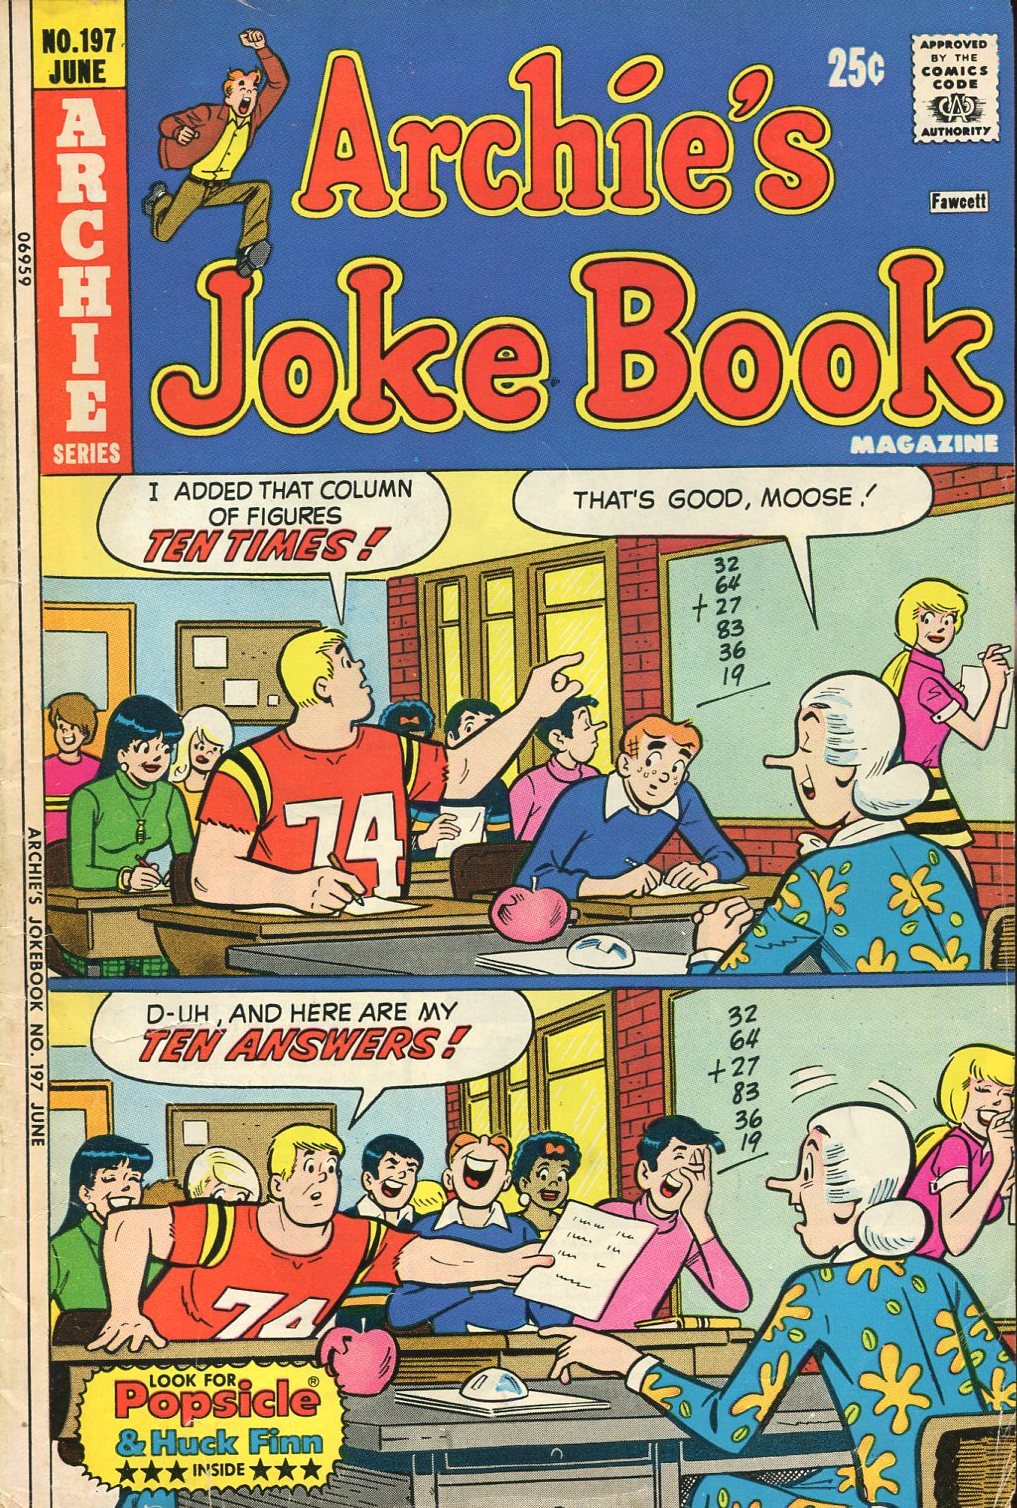 Read online Archie's Joke Book Magazine comic -  Issue #197 - 1